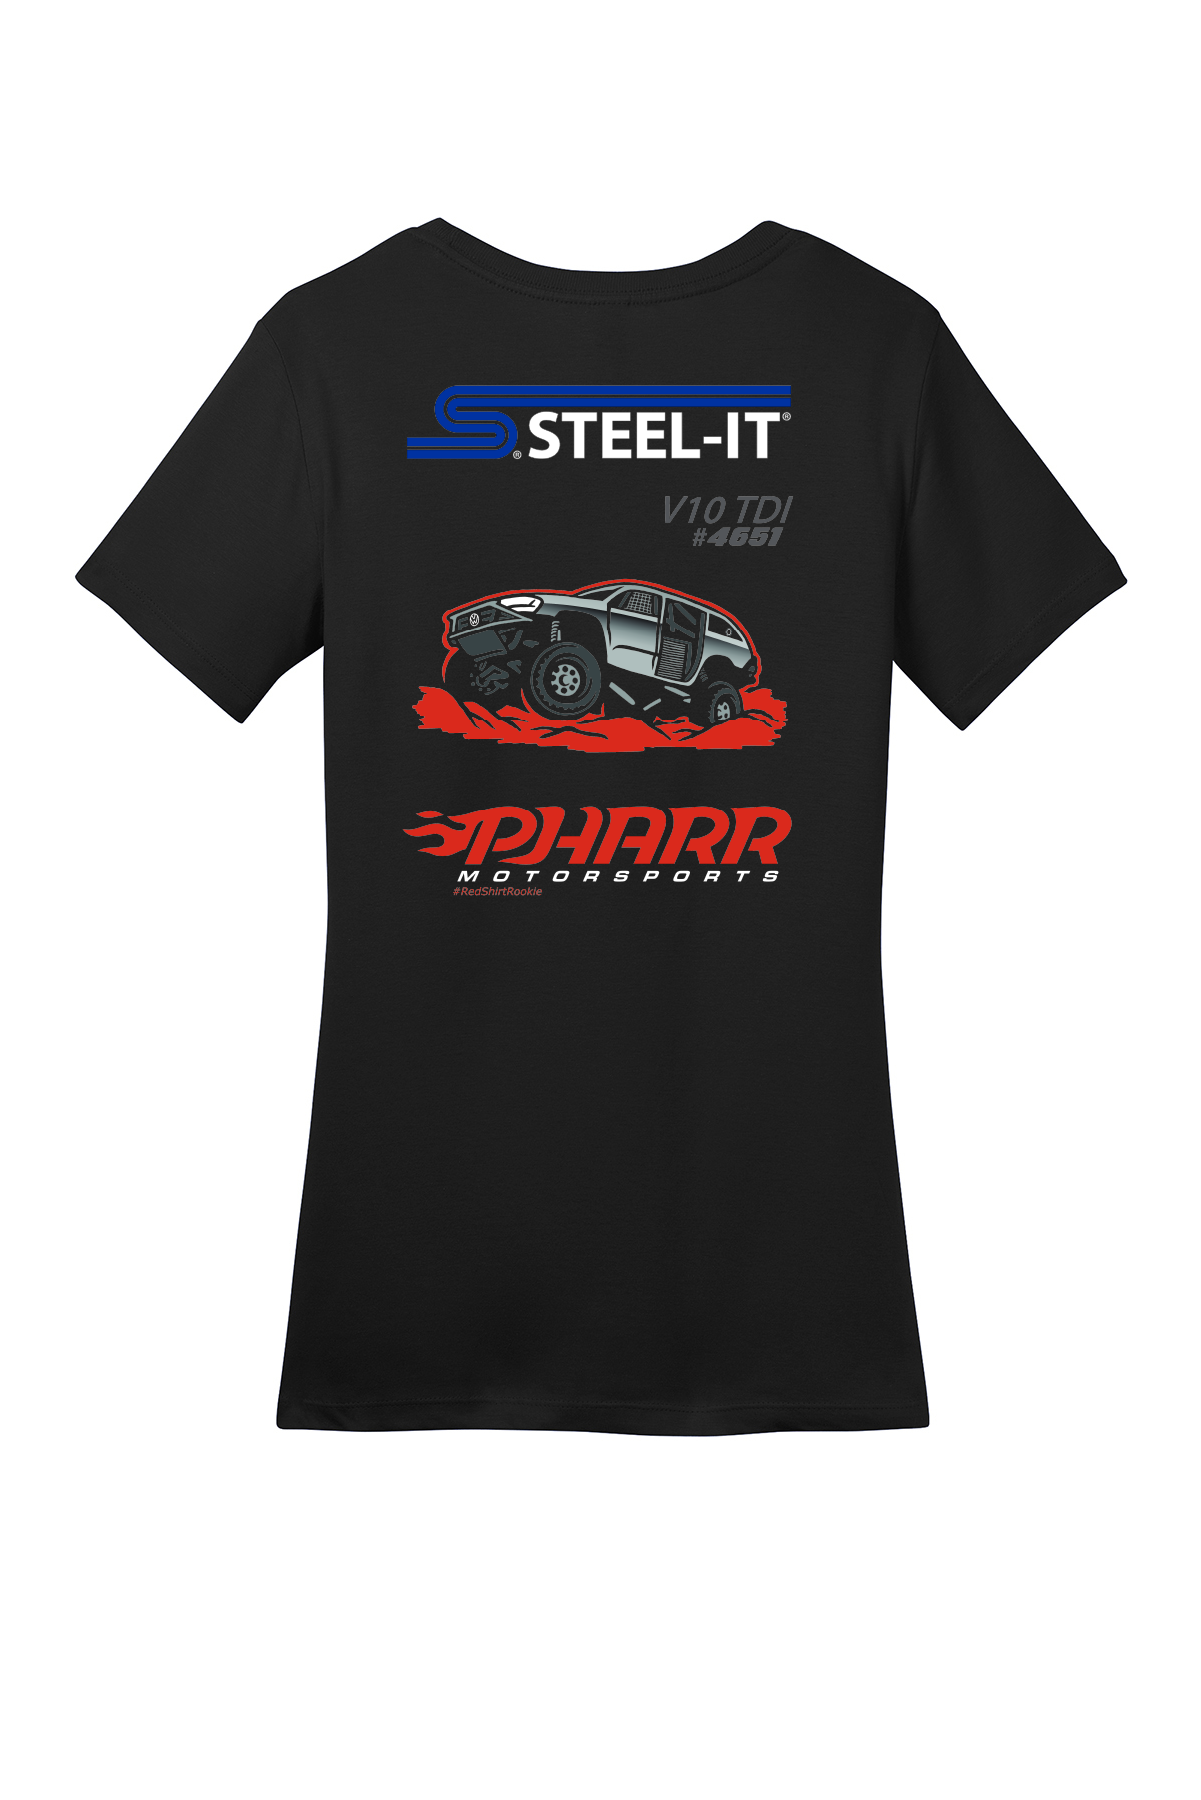 Pharr Motorsports 3  #4651